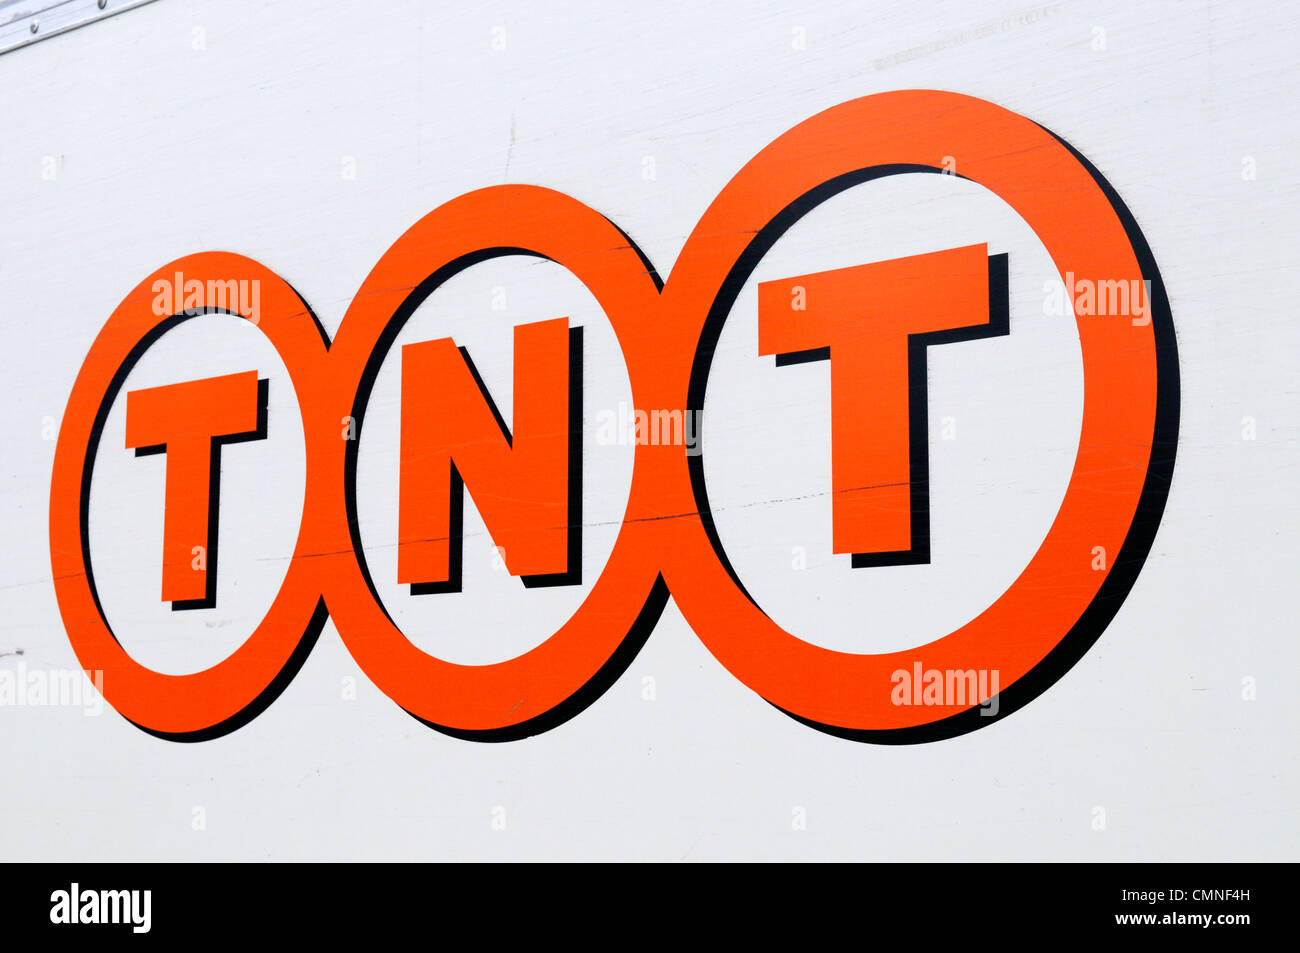 TNT Global Express Courier Logo, Cambridge, England, UK Banque D'Images